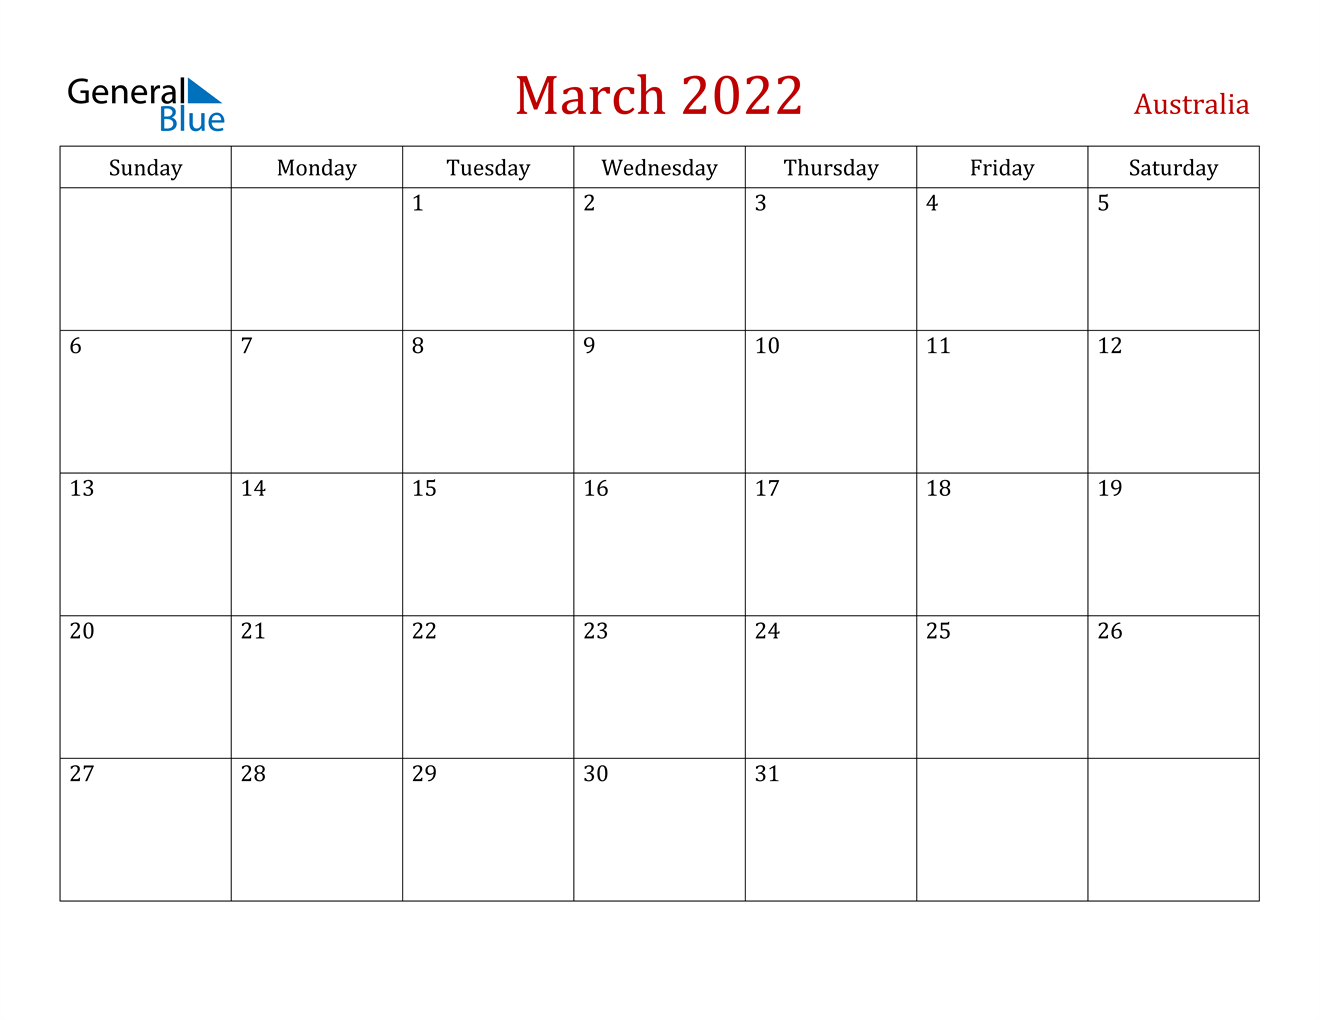 March 2022 Calendar - Australia